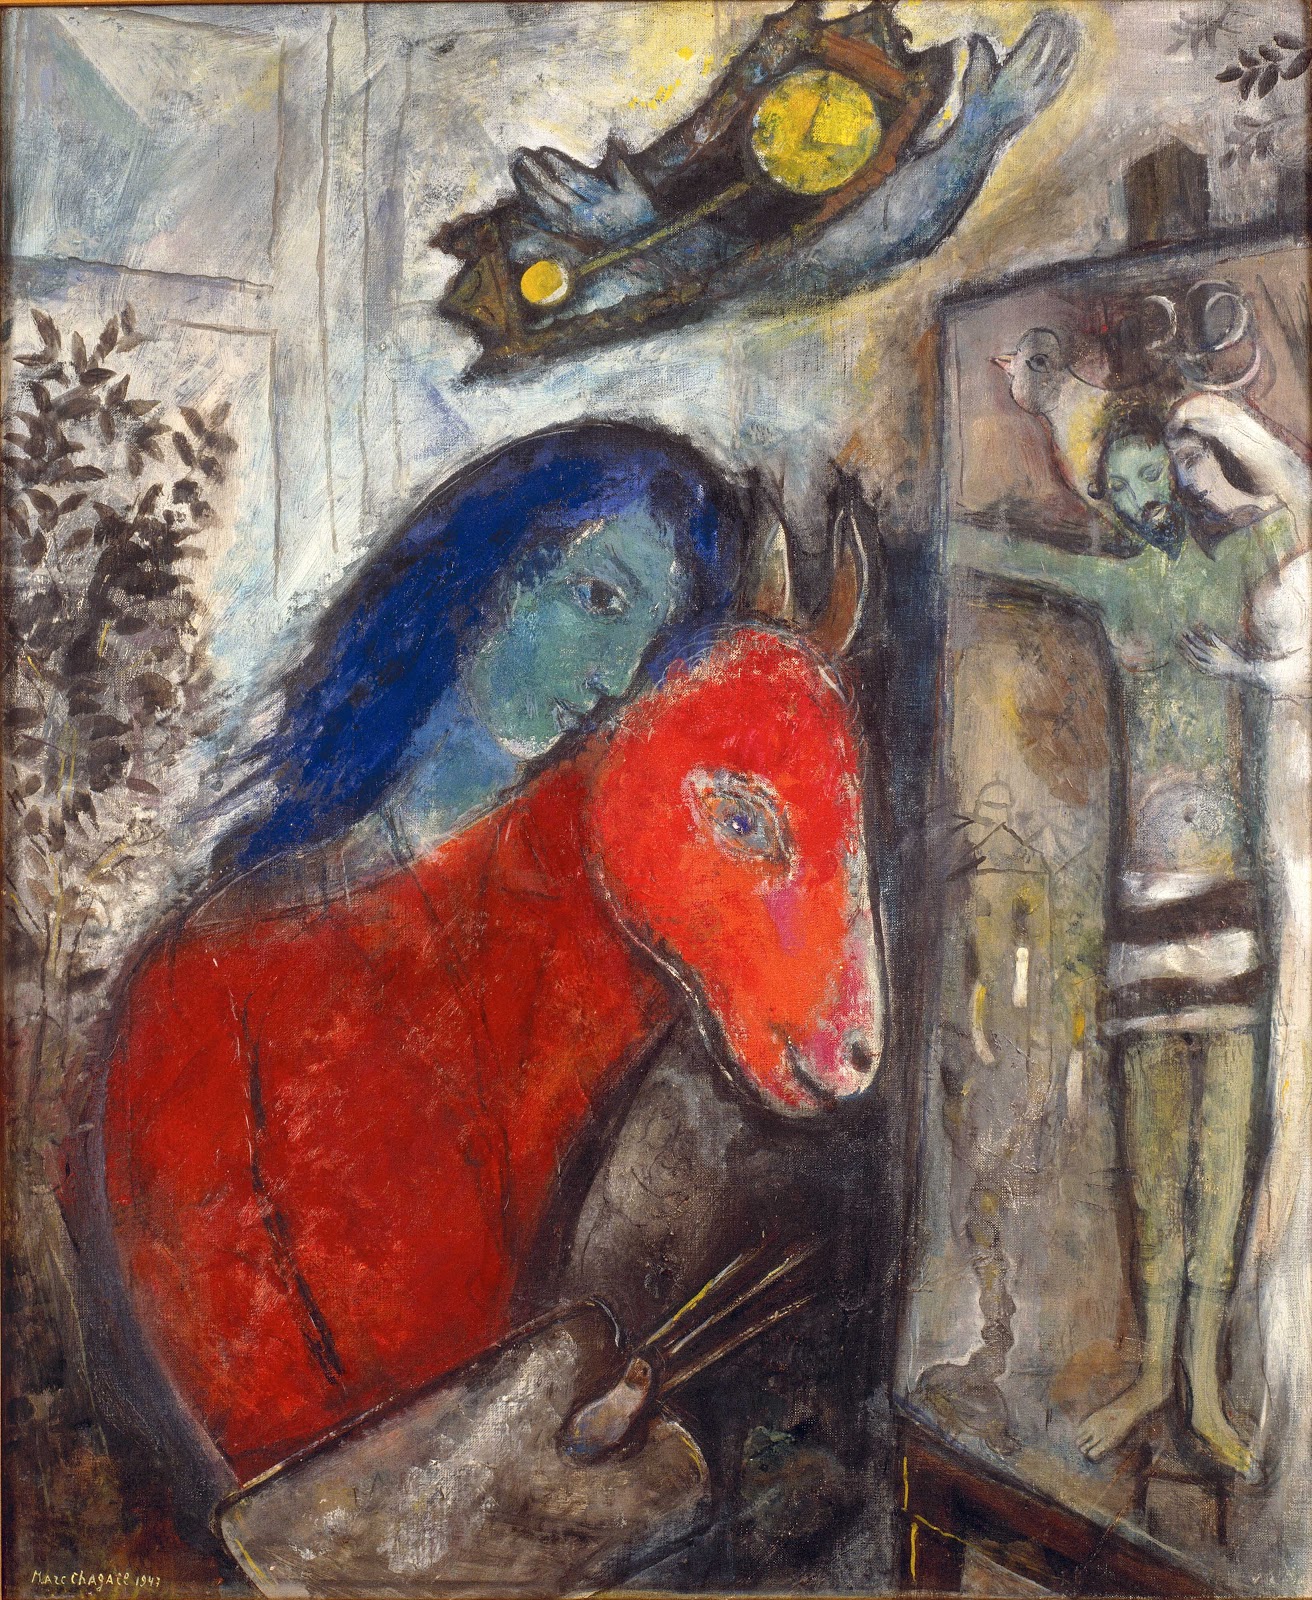 Marc+Chagall-1887-1985 (405).jpg